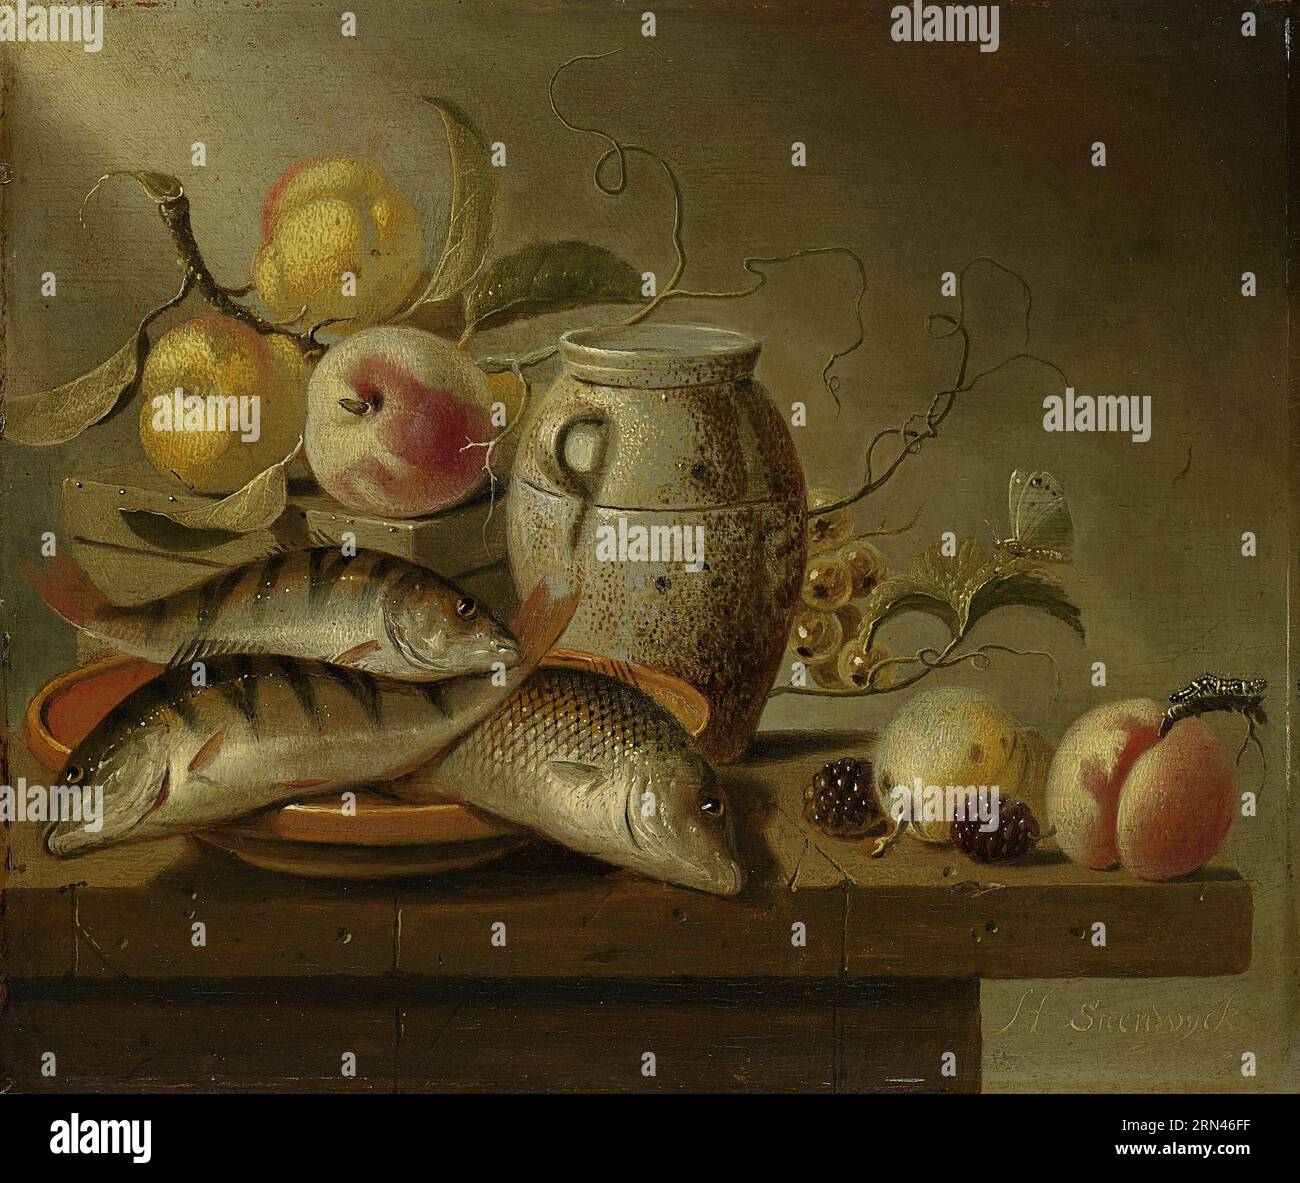 Nature morte avec pot en faïence, poisson et fruits 1652 par Harmen Steenwijck Banque D'Images